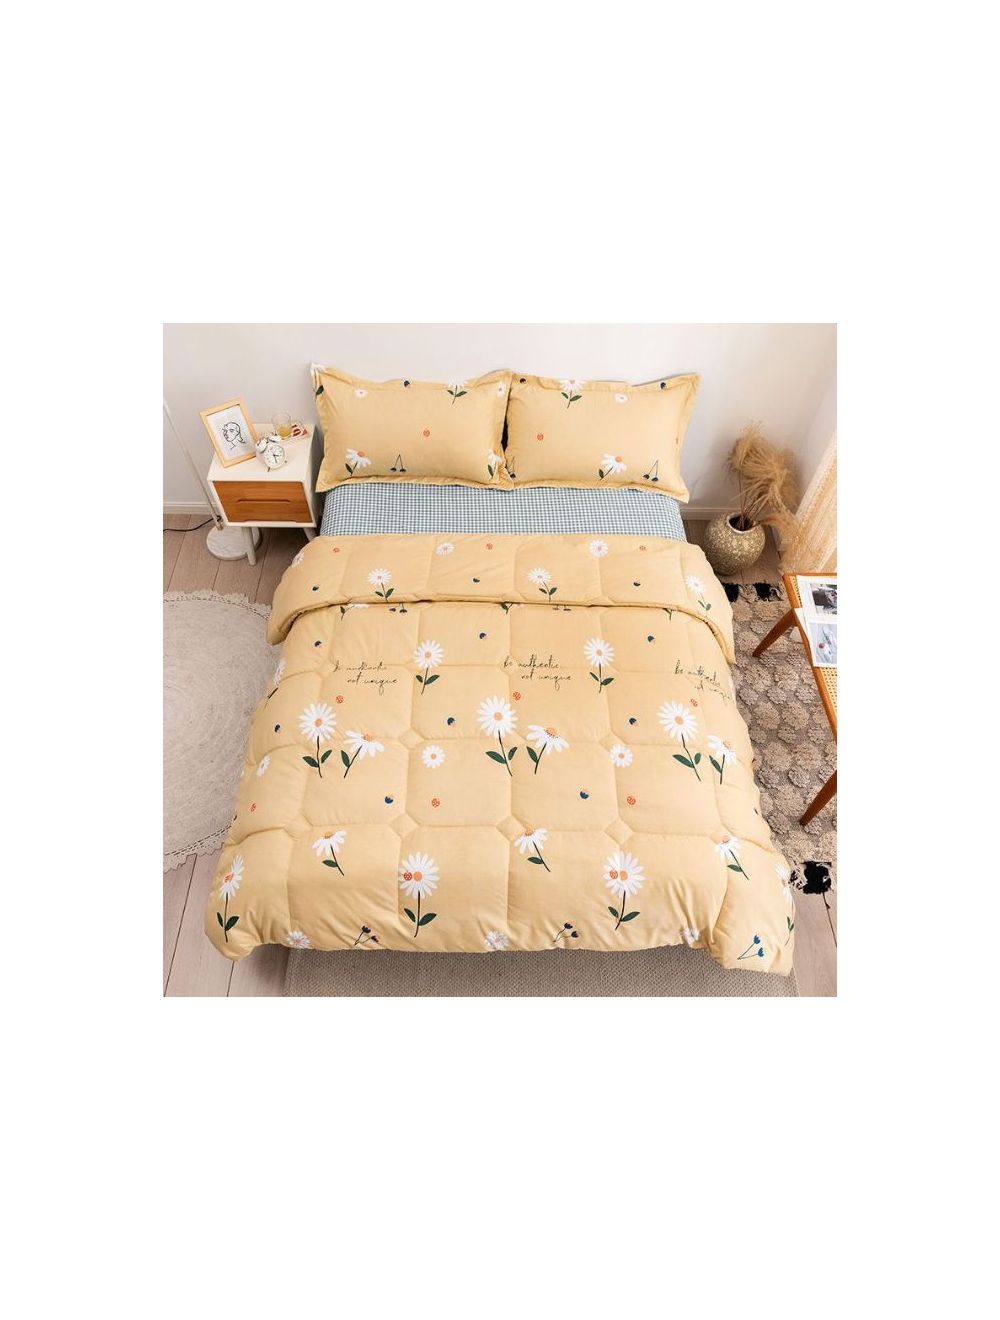 Rishahome 4 Piece Queen Size Comforter Set Microfiber Gold 210x230cm-HGOCS0004